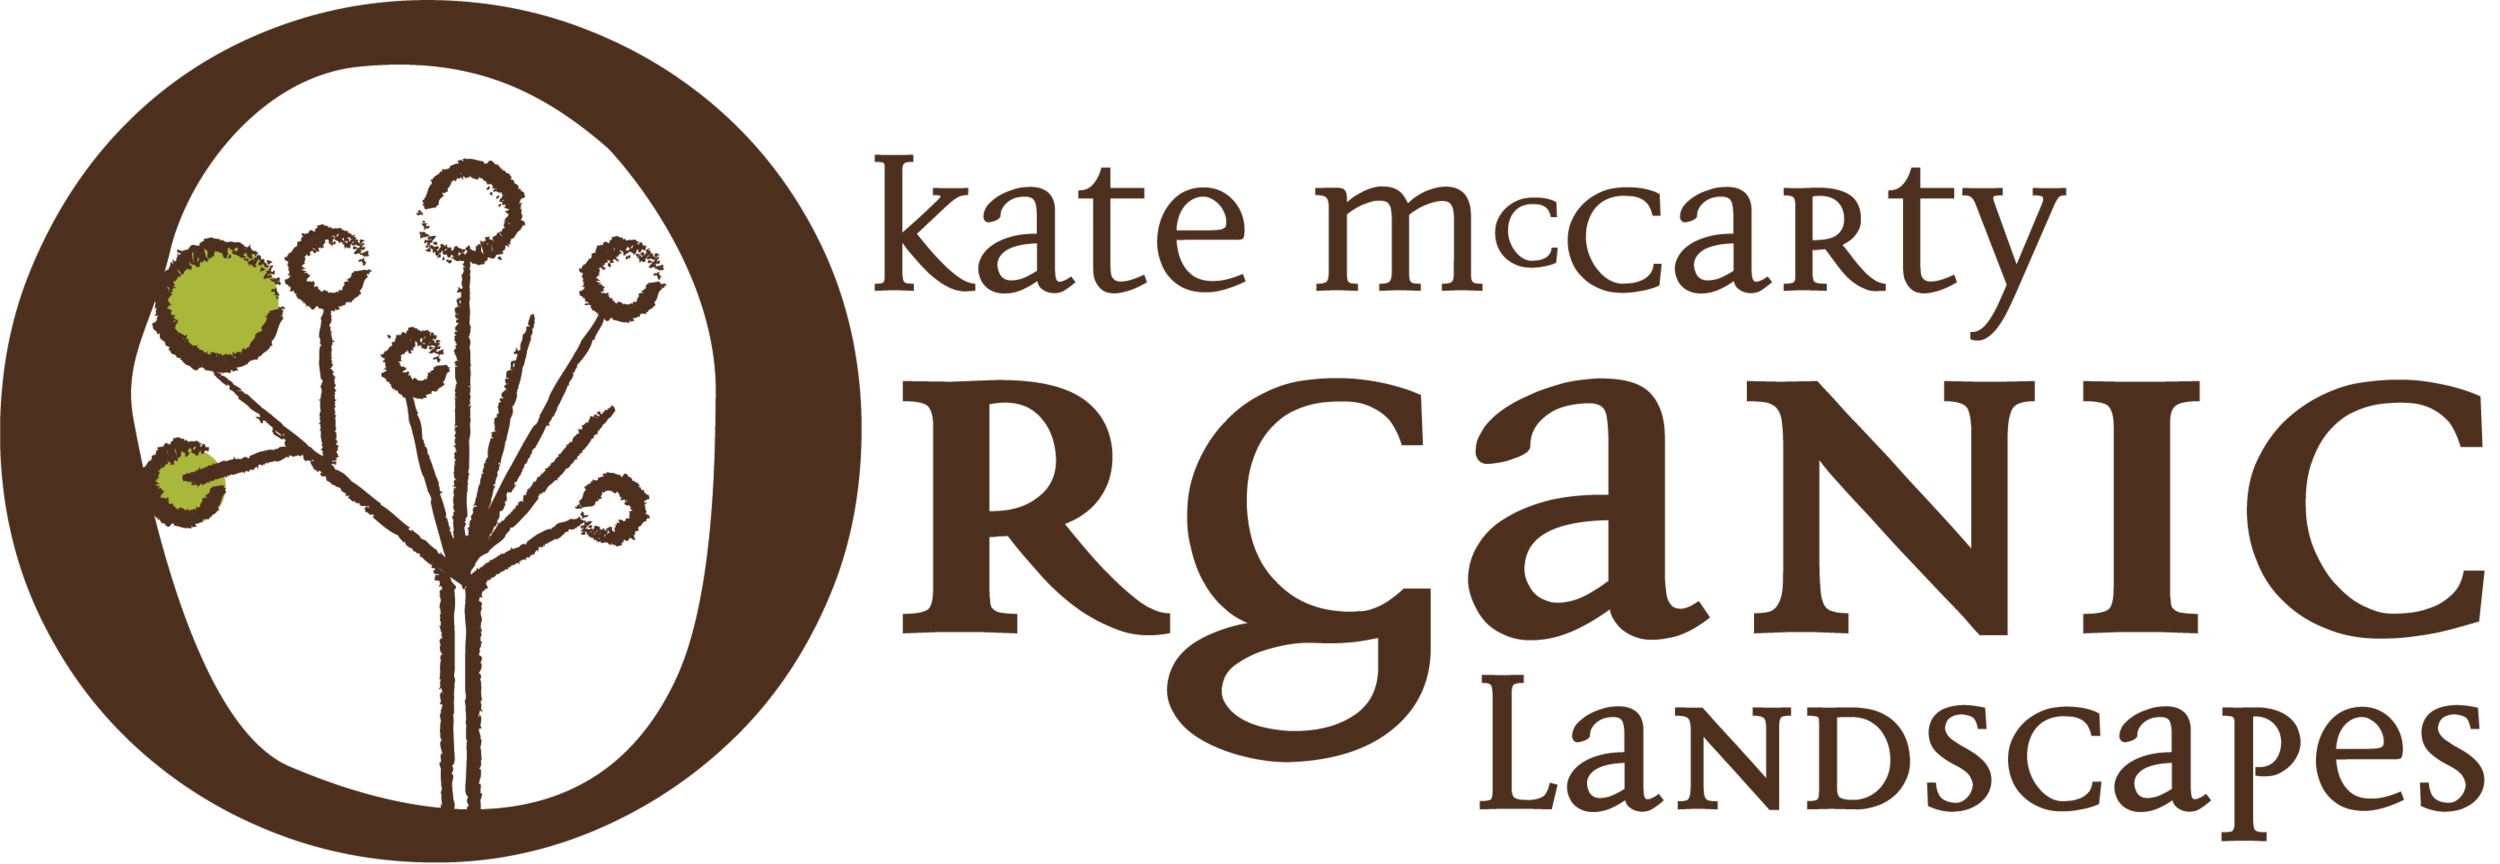 Kate McCarty Organic Landscapes